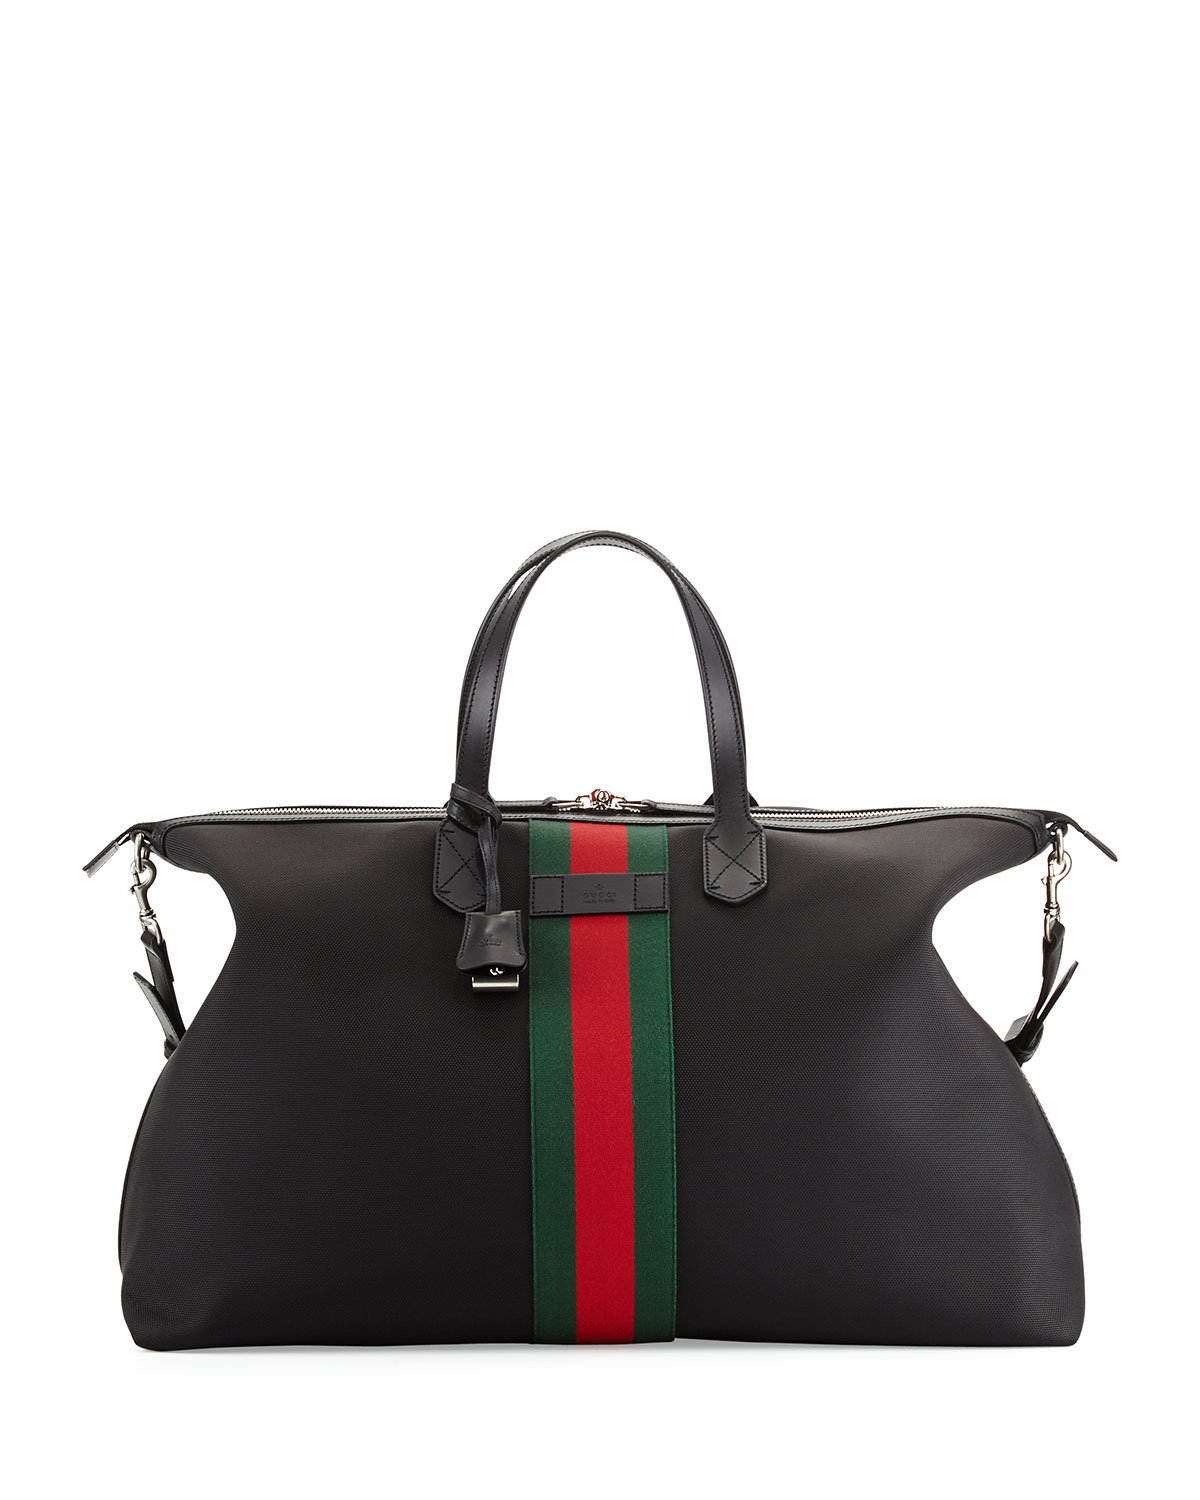 Gucci Techno Canvas Duffel Bag in Black for Men - Lyst